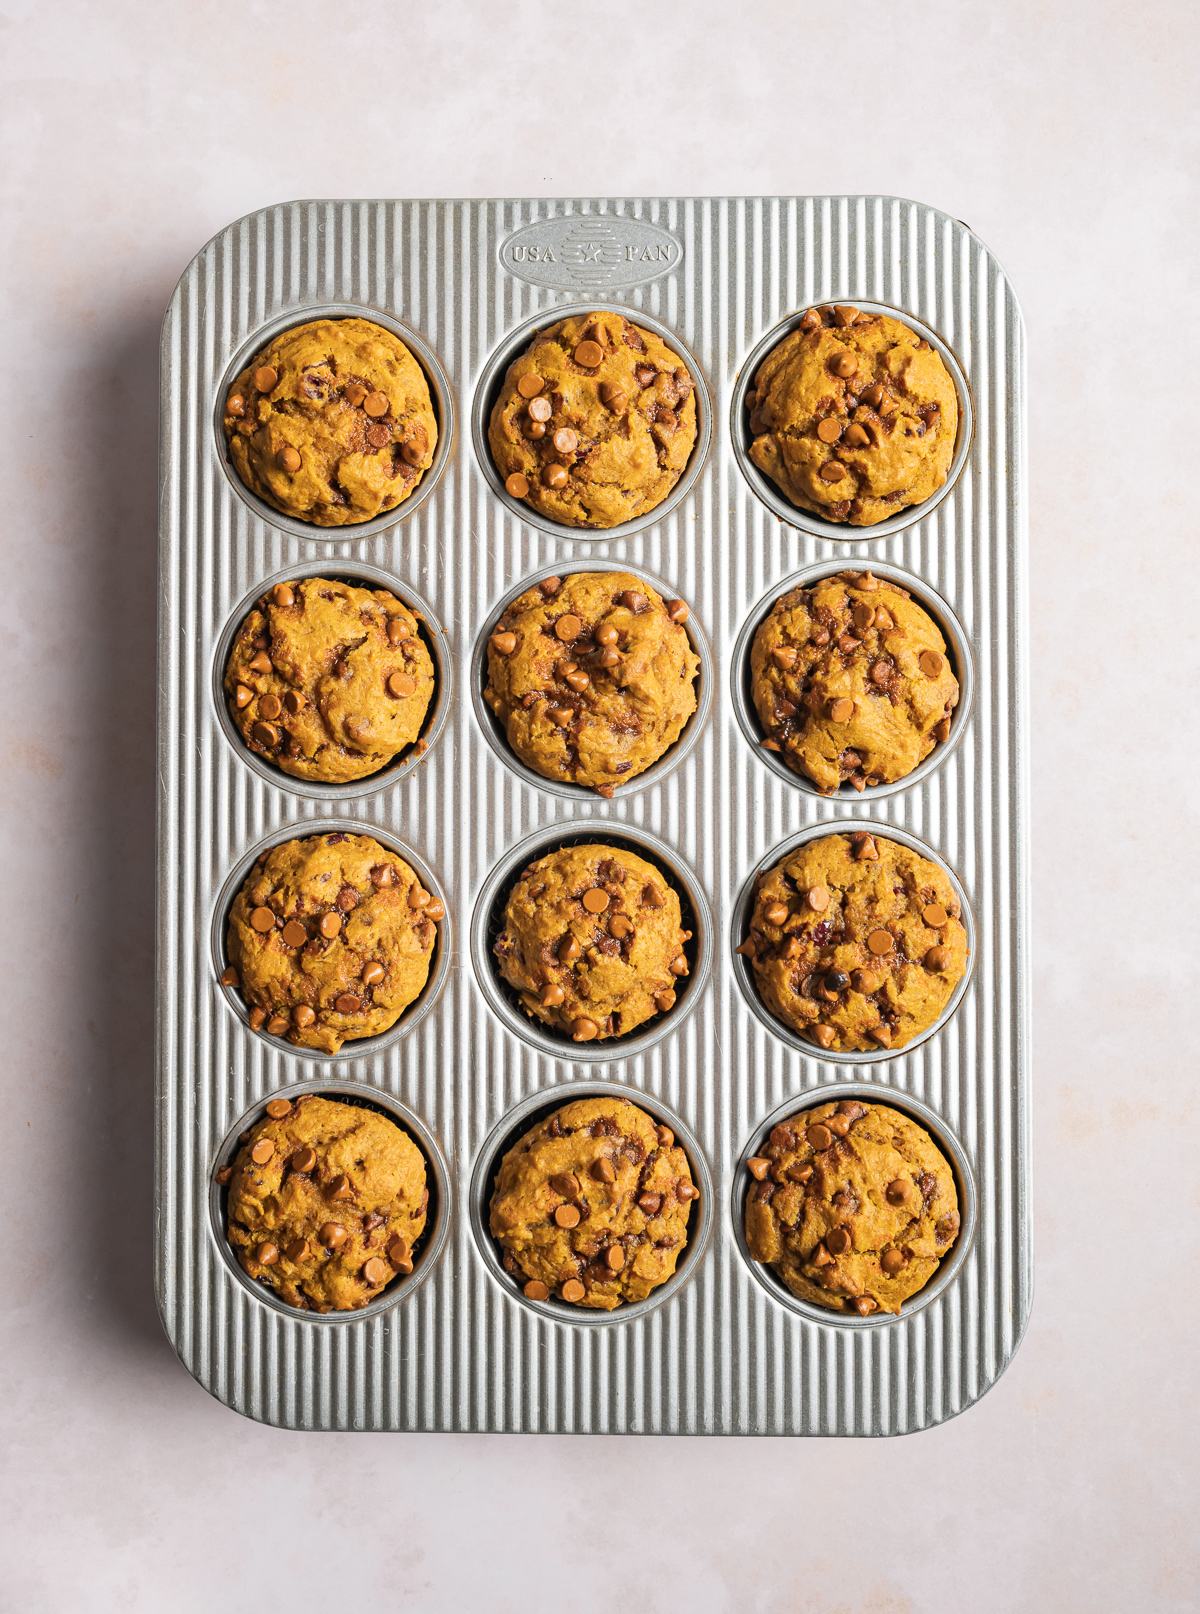 12 (twelve) baked cinnamon pumpkin muffins in a muffin tin